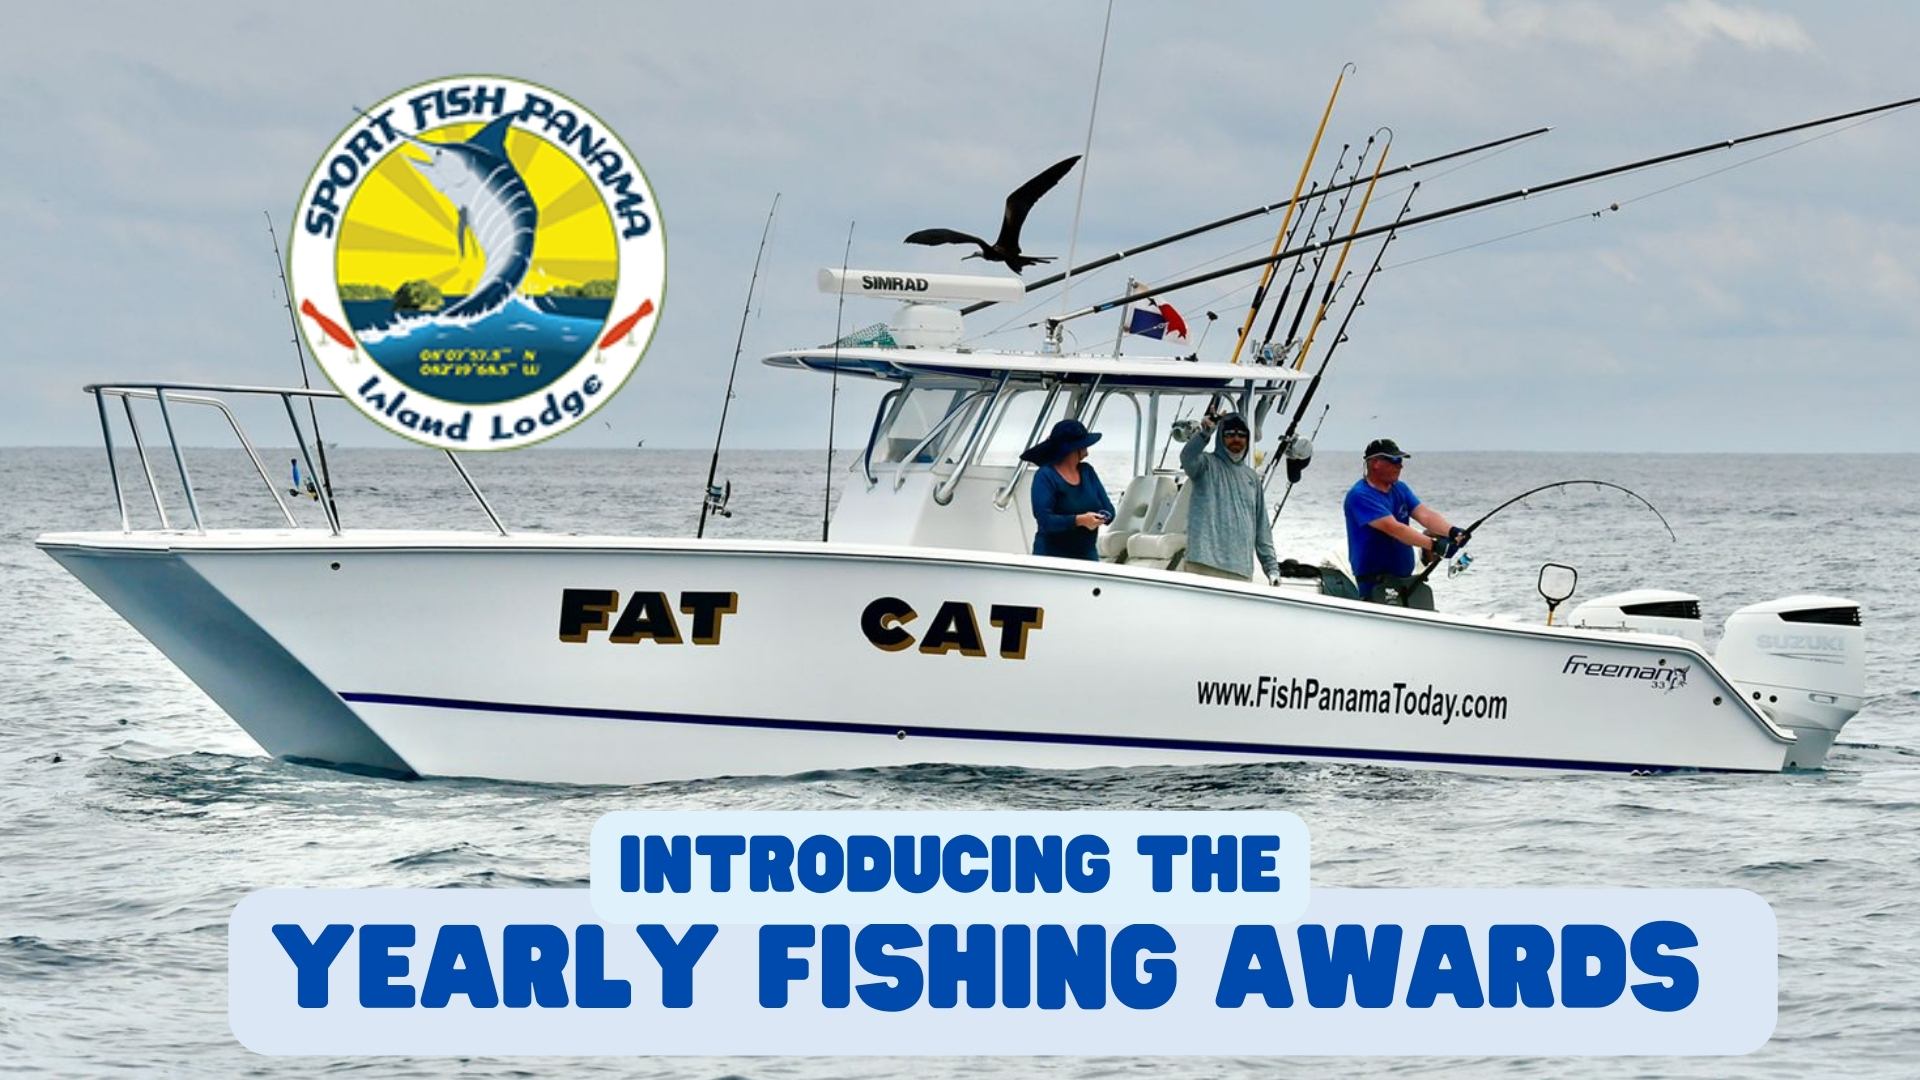 img-Introducing The Sport Fish Panama Island Lodge Yearly Fishing Awards